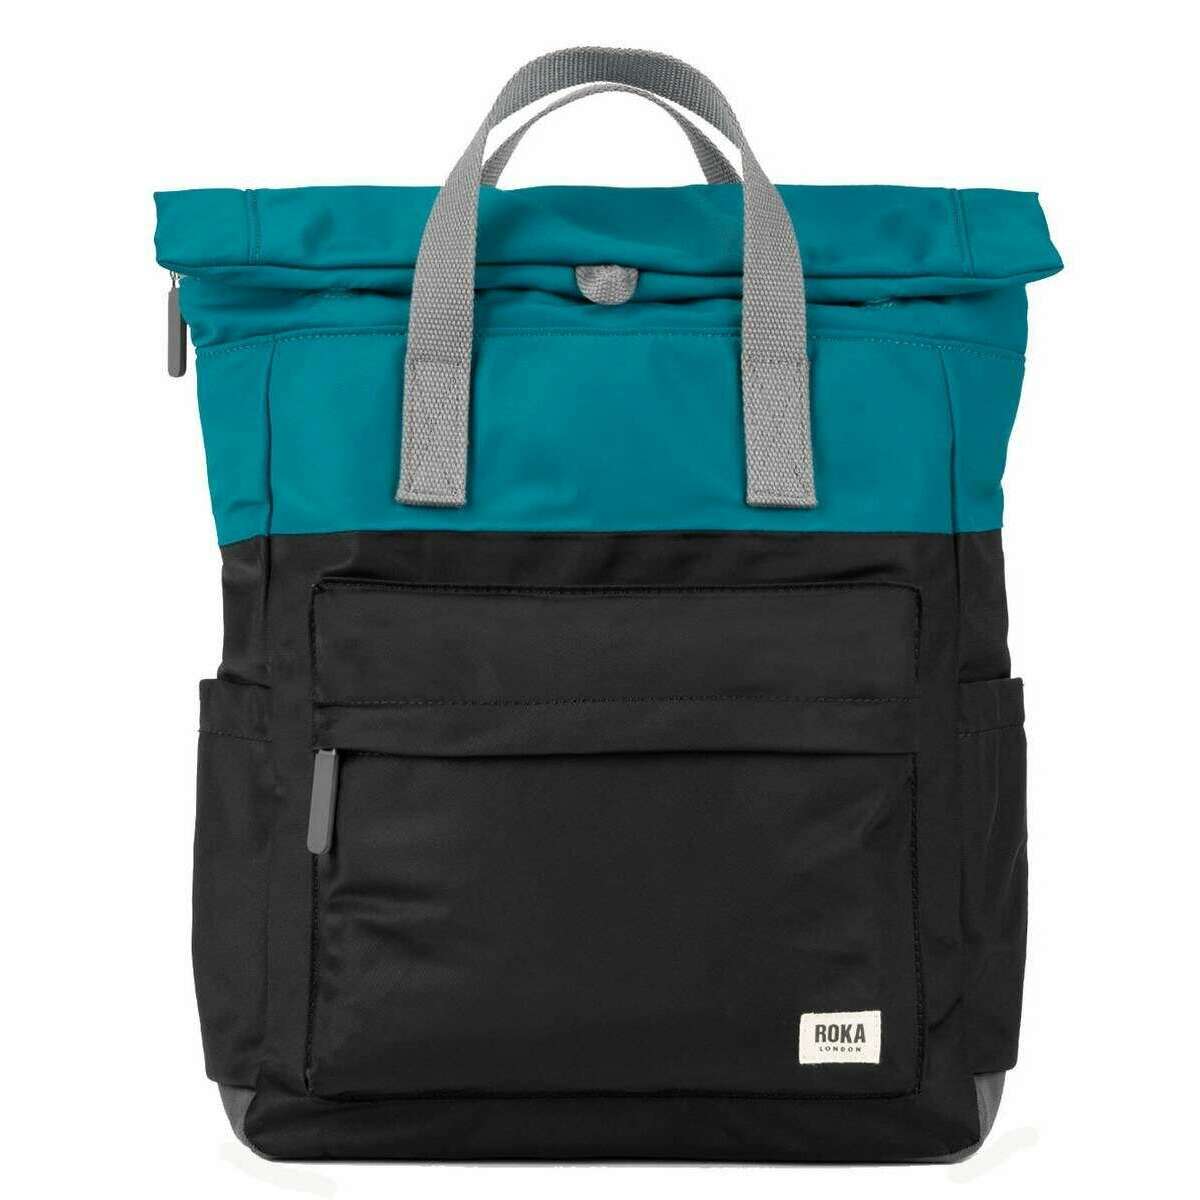 Roka Canfield B Medium Creative Waste Two Tone Recycled Nylon Backpack - Marine Blue/Black